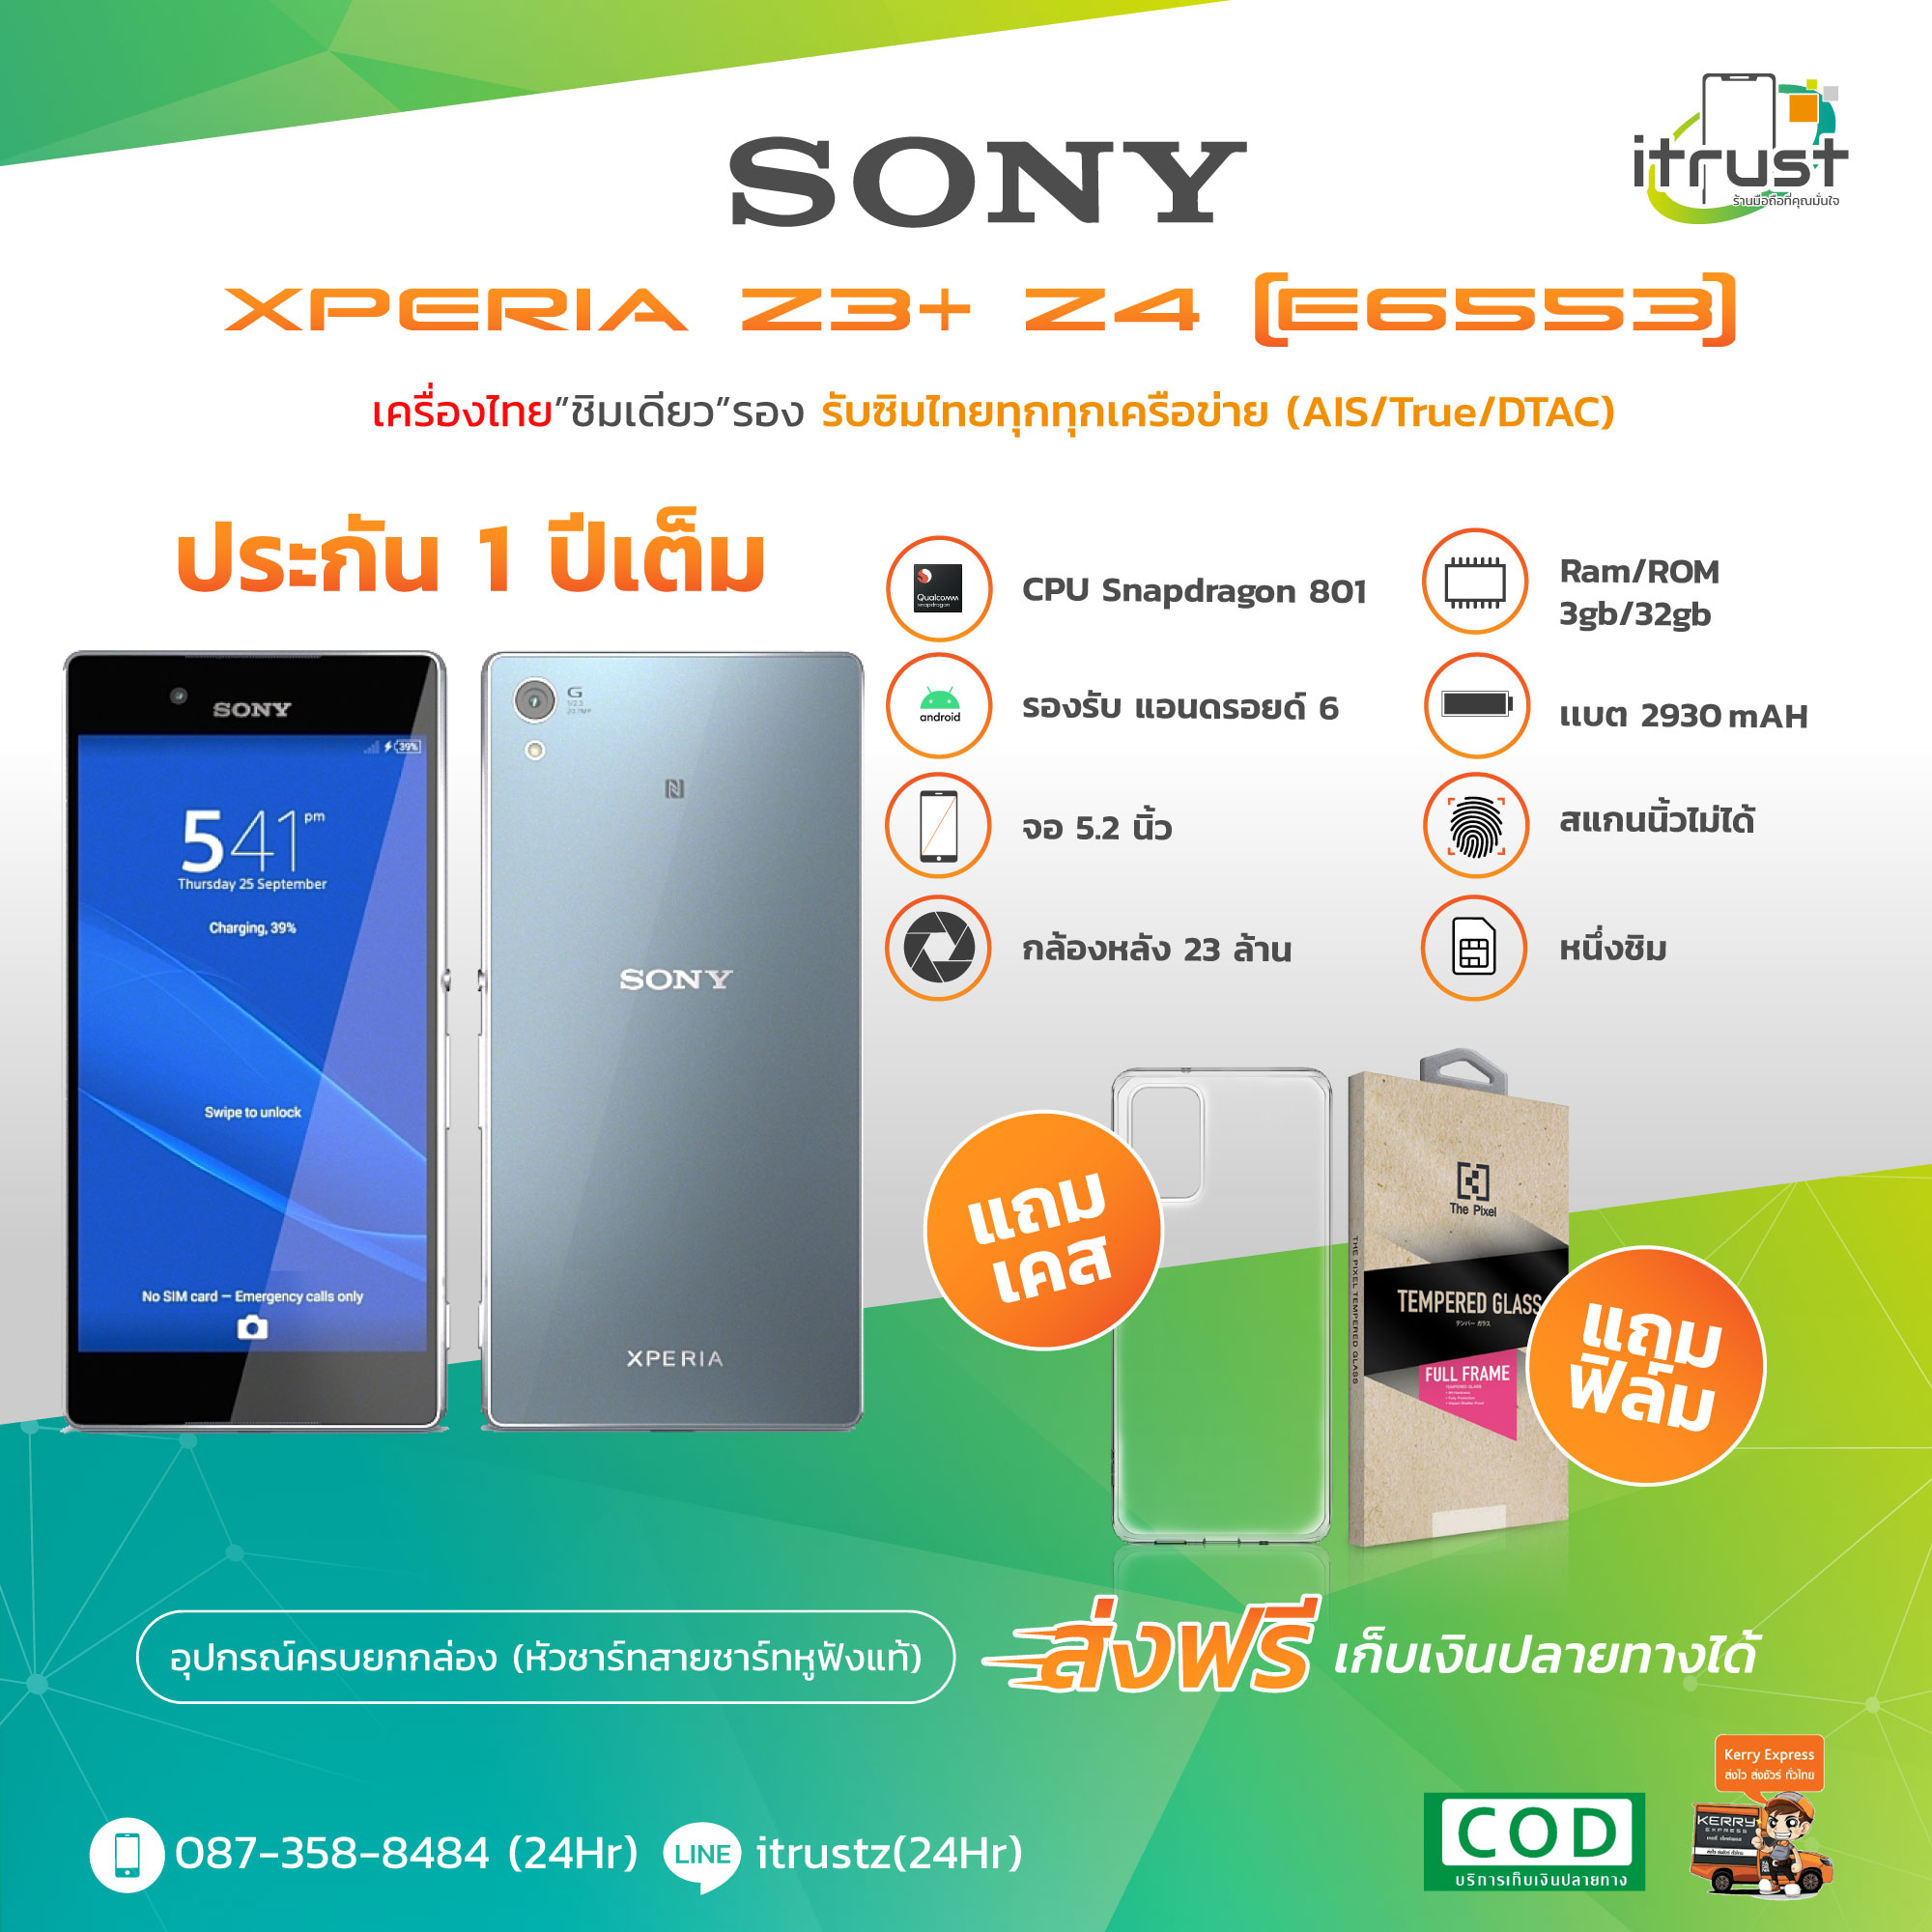 Sony Xperia Z4/เครื่องไทย / E6533 E6553 จอ 5.2/ซิมเดียวหรือสองซิม/Rom 3GB/32GB มือถือโซนี่ ของใหม่ (ประกันร้าน12 เดือน) ร้าน itrust Line ID:itrustz ติดต่อได้ 087-348-8484 24ชม